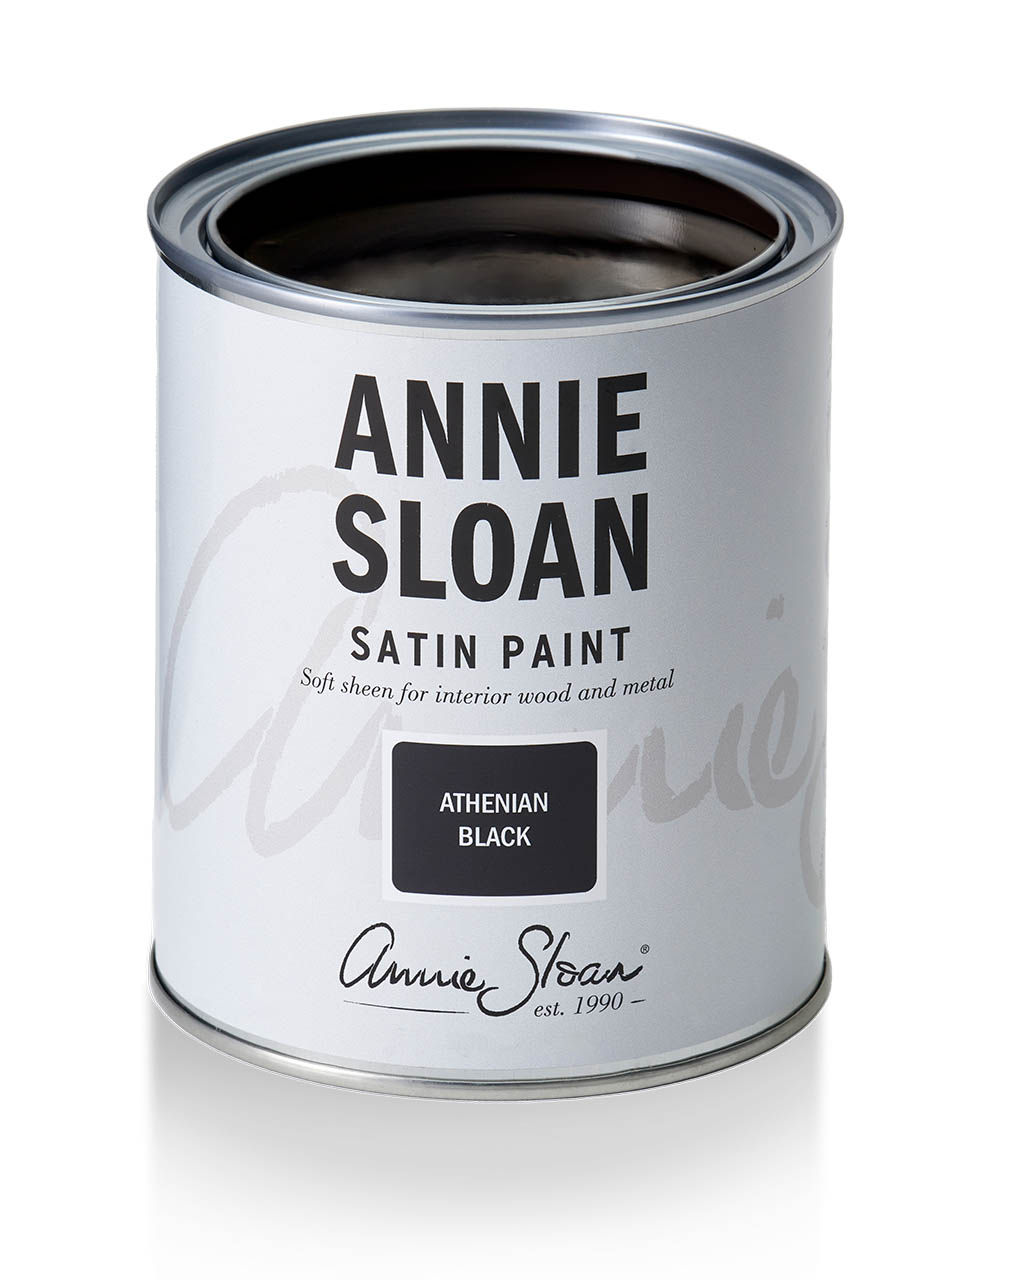 Athenian Black Satin Paint by Annie Sloan - tin shot